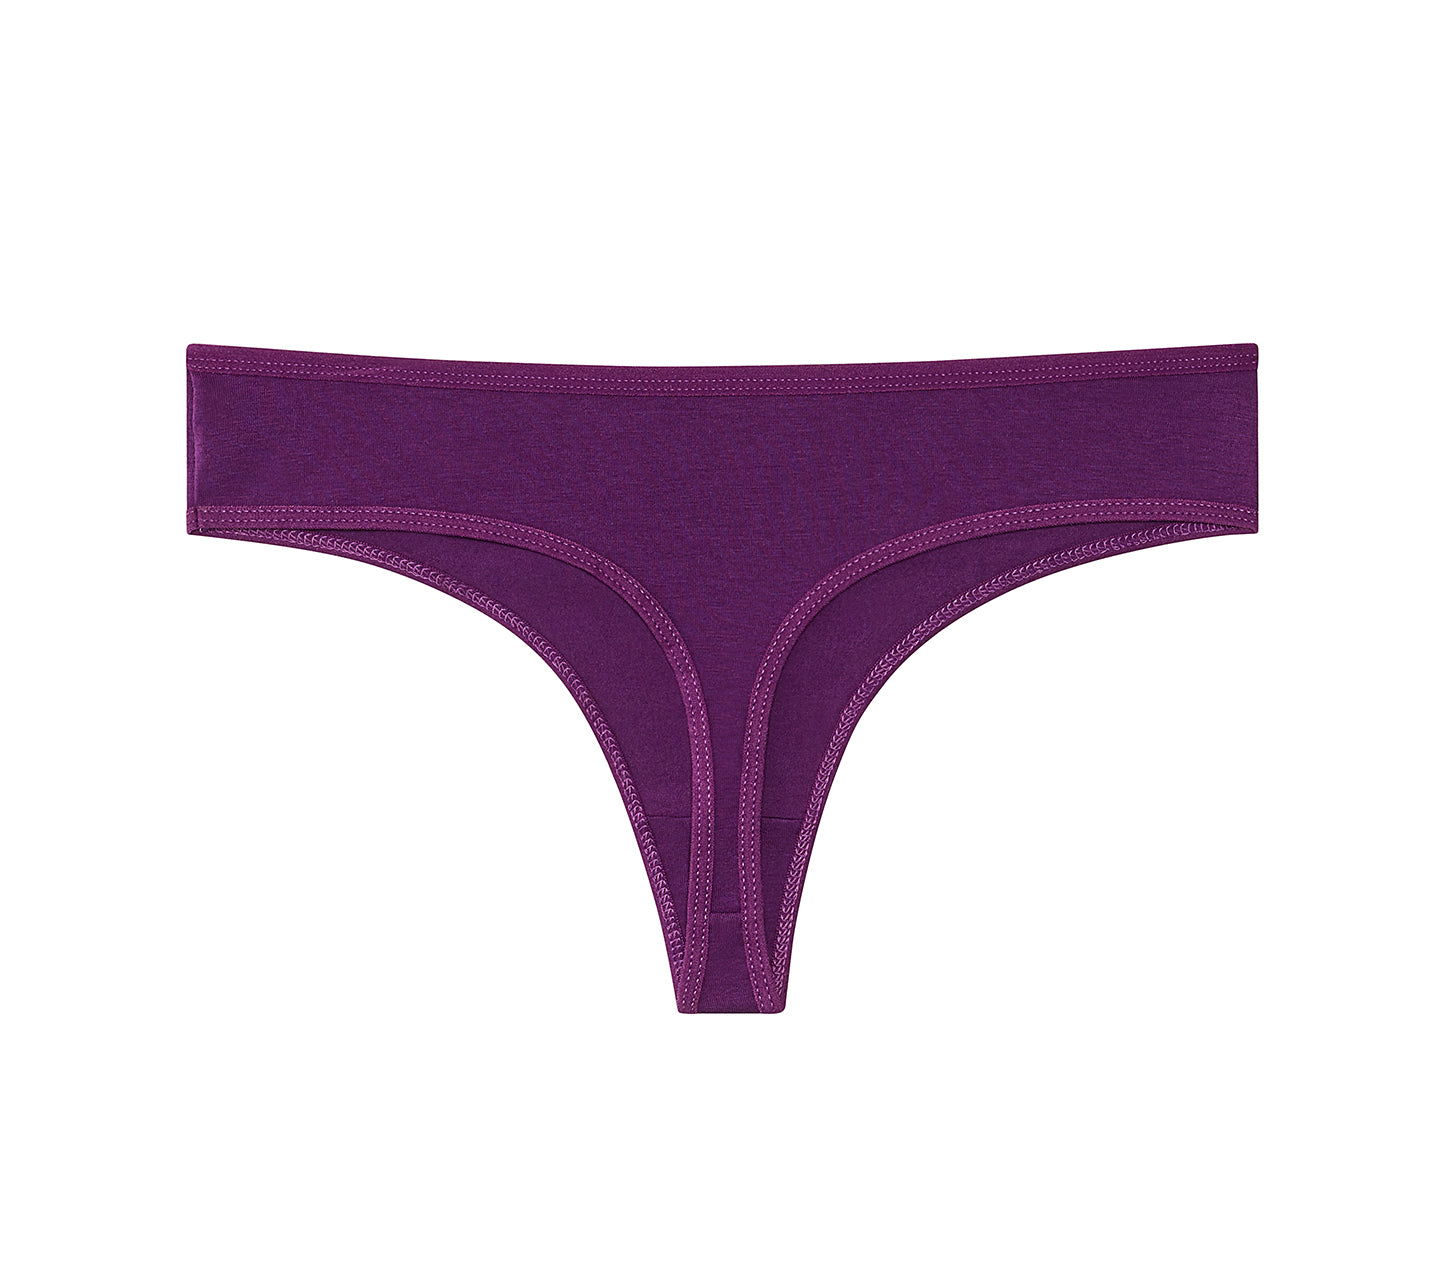 Women's Cotton Thongs Dark Colors G String Underwear (Pack of 6)